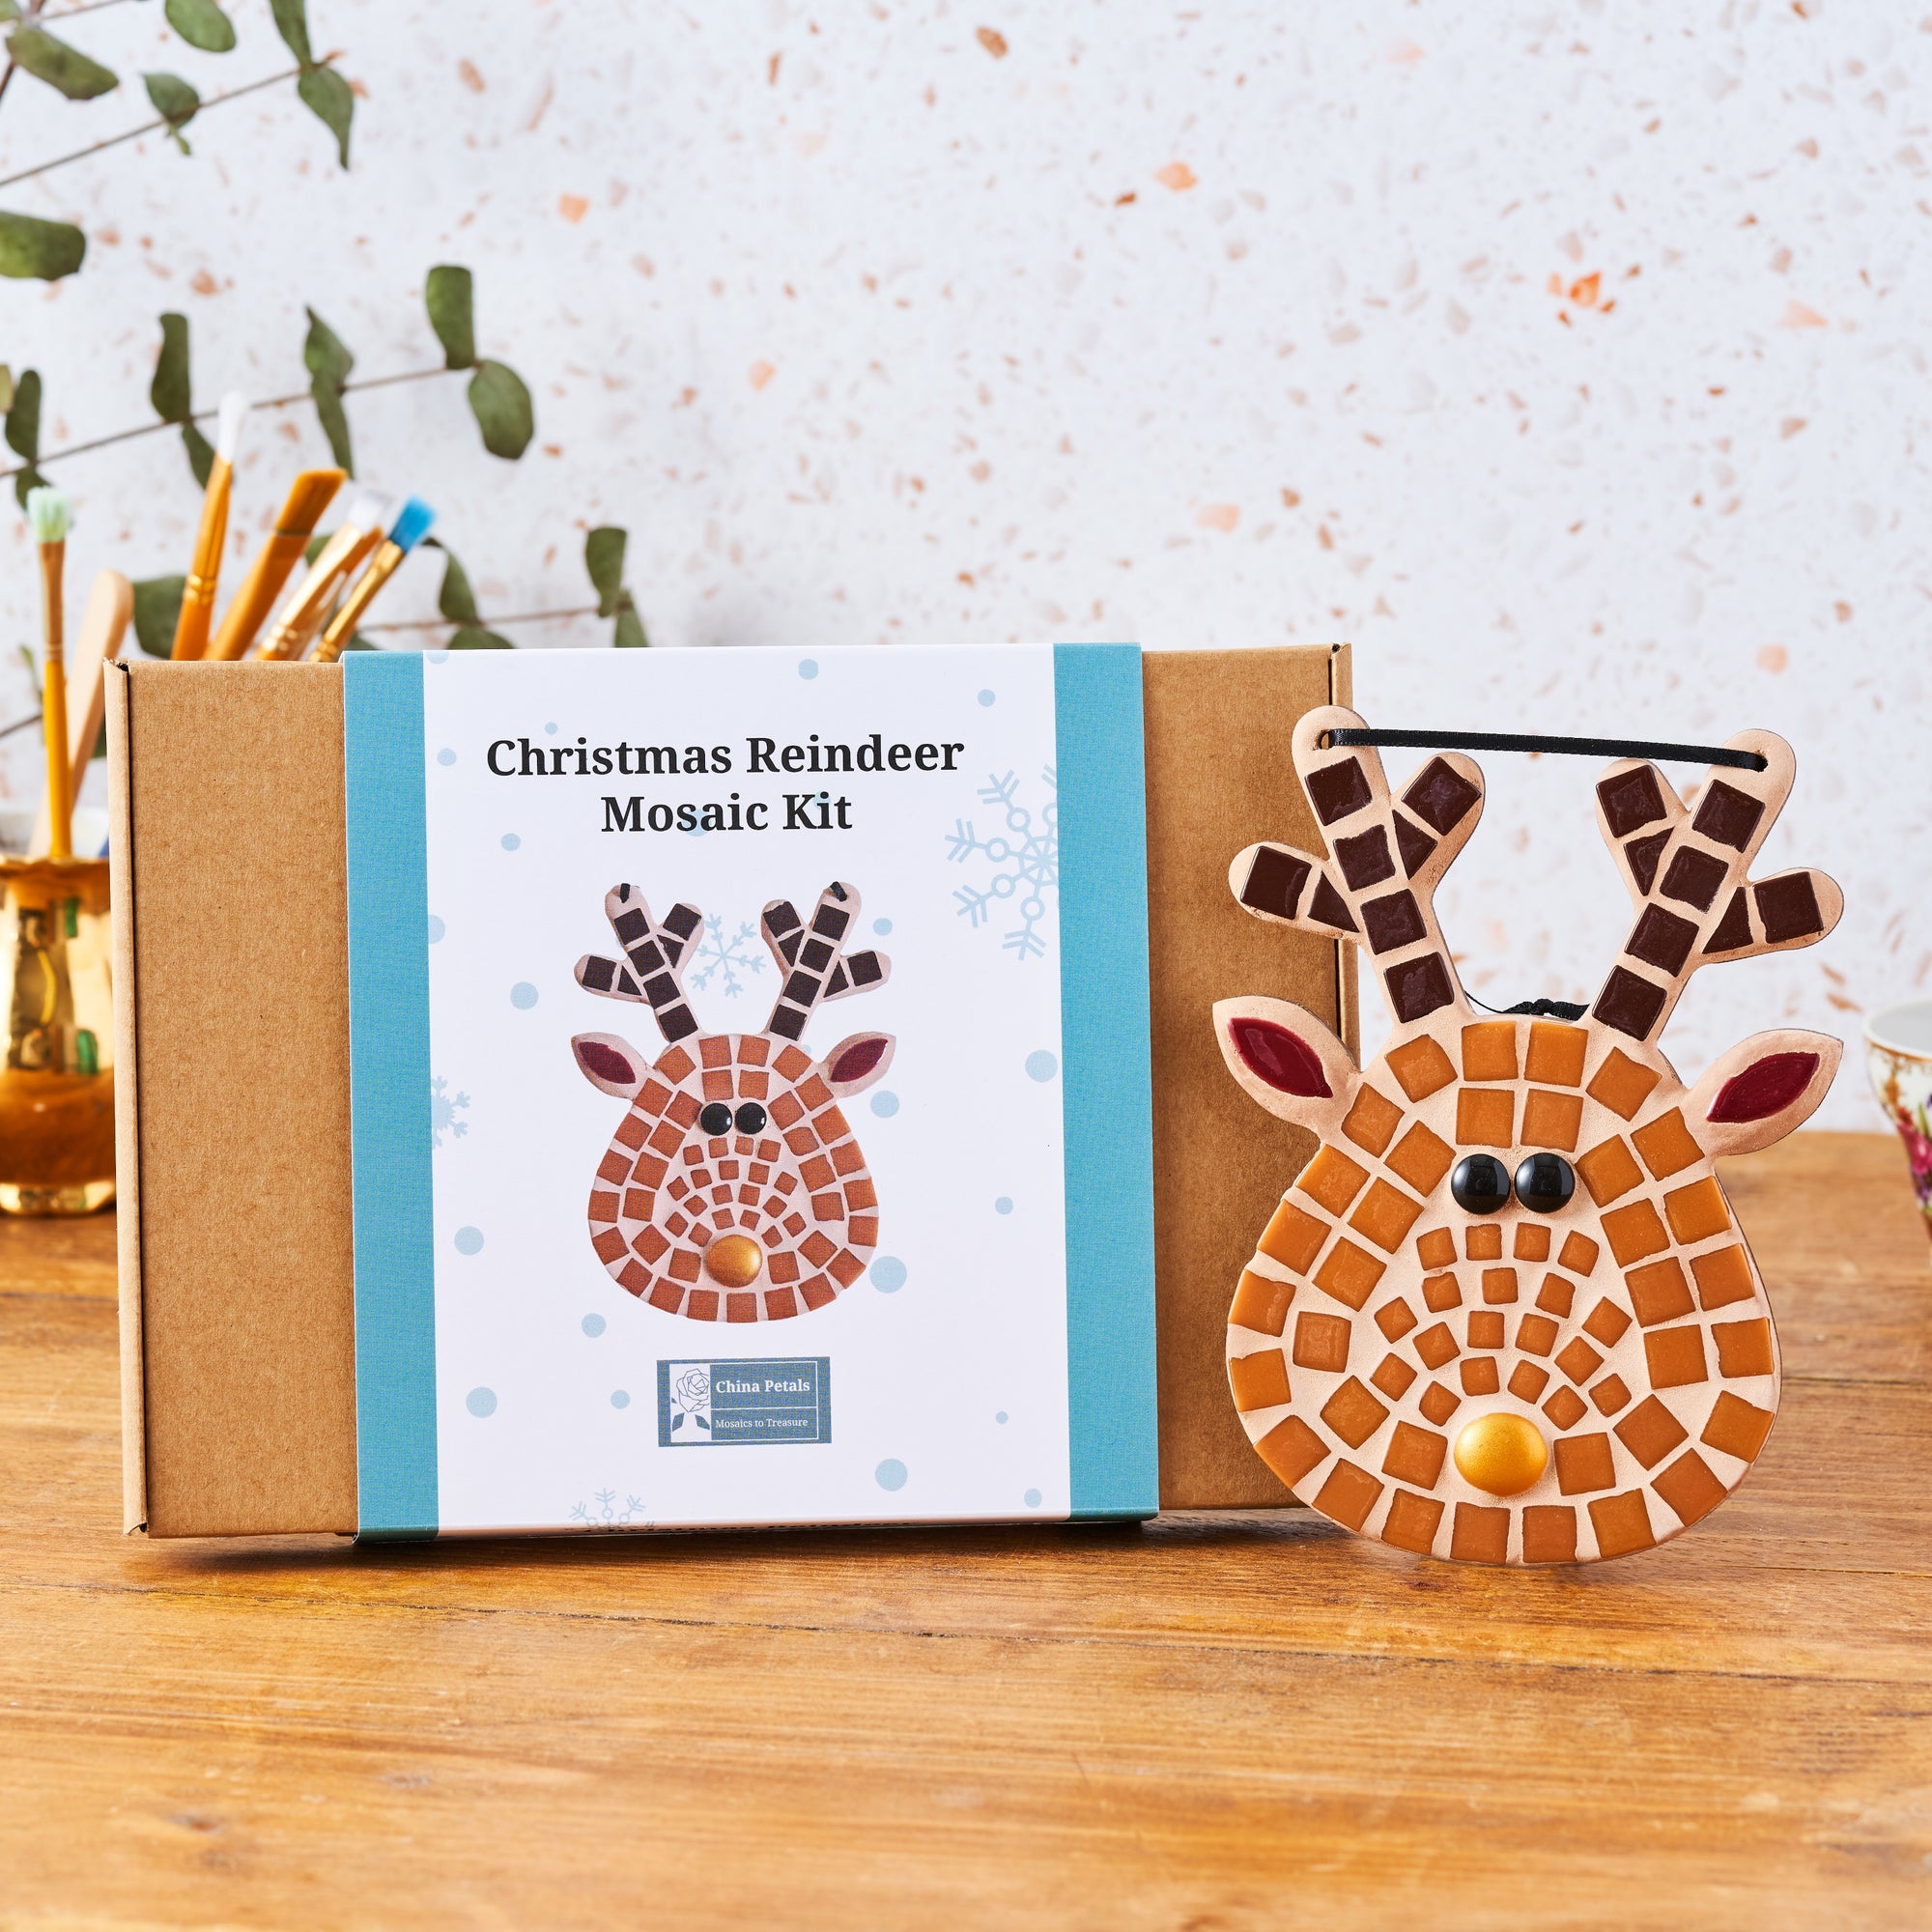 Christmas reindeer mosaic kit